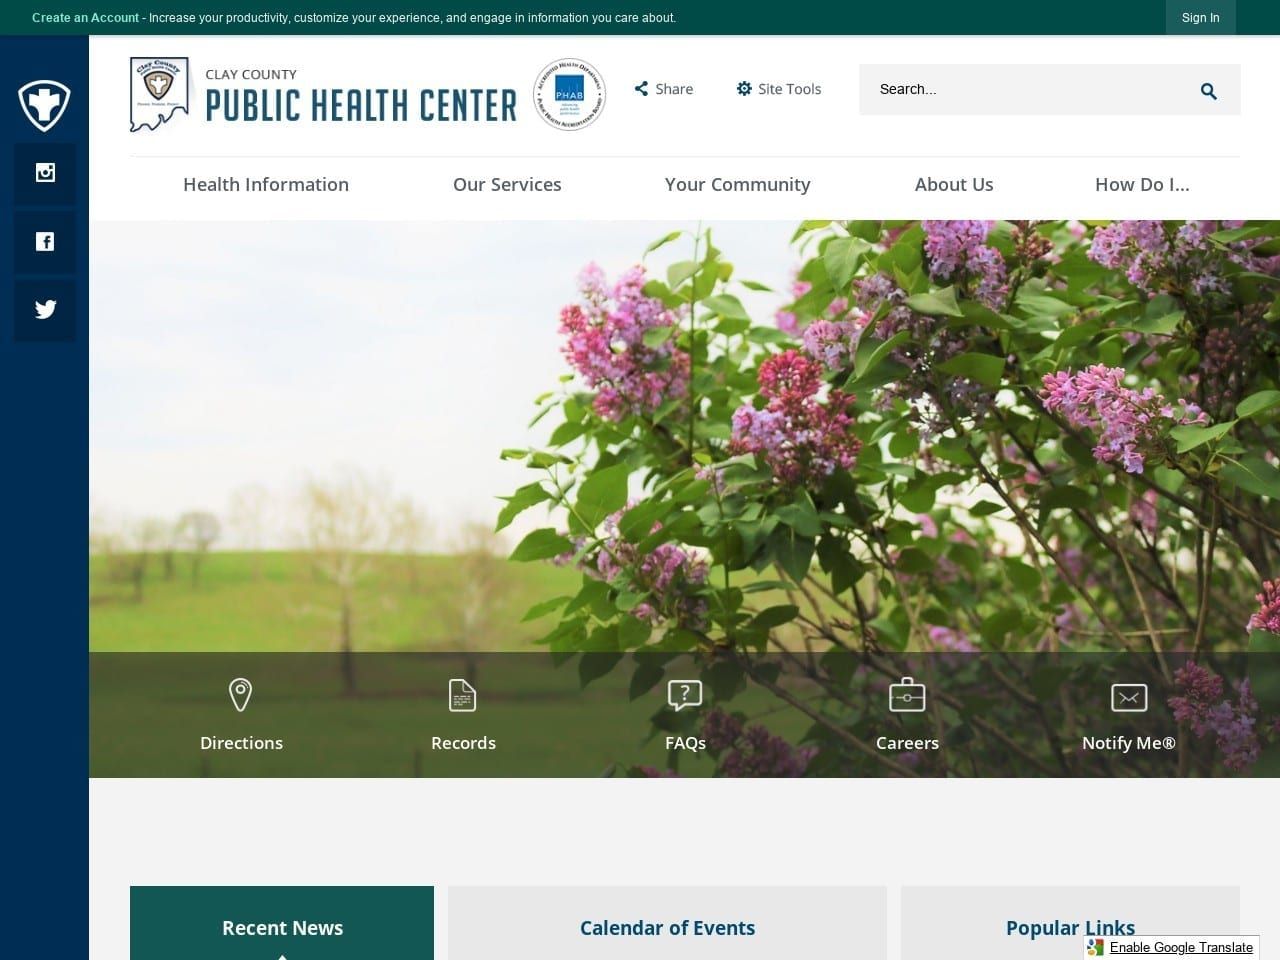 Clay County Public Health Center Website Screenshot from clayhealth.com